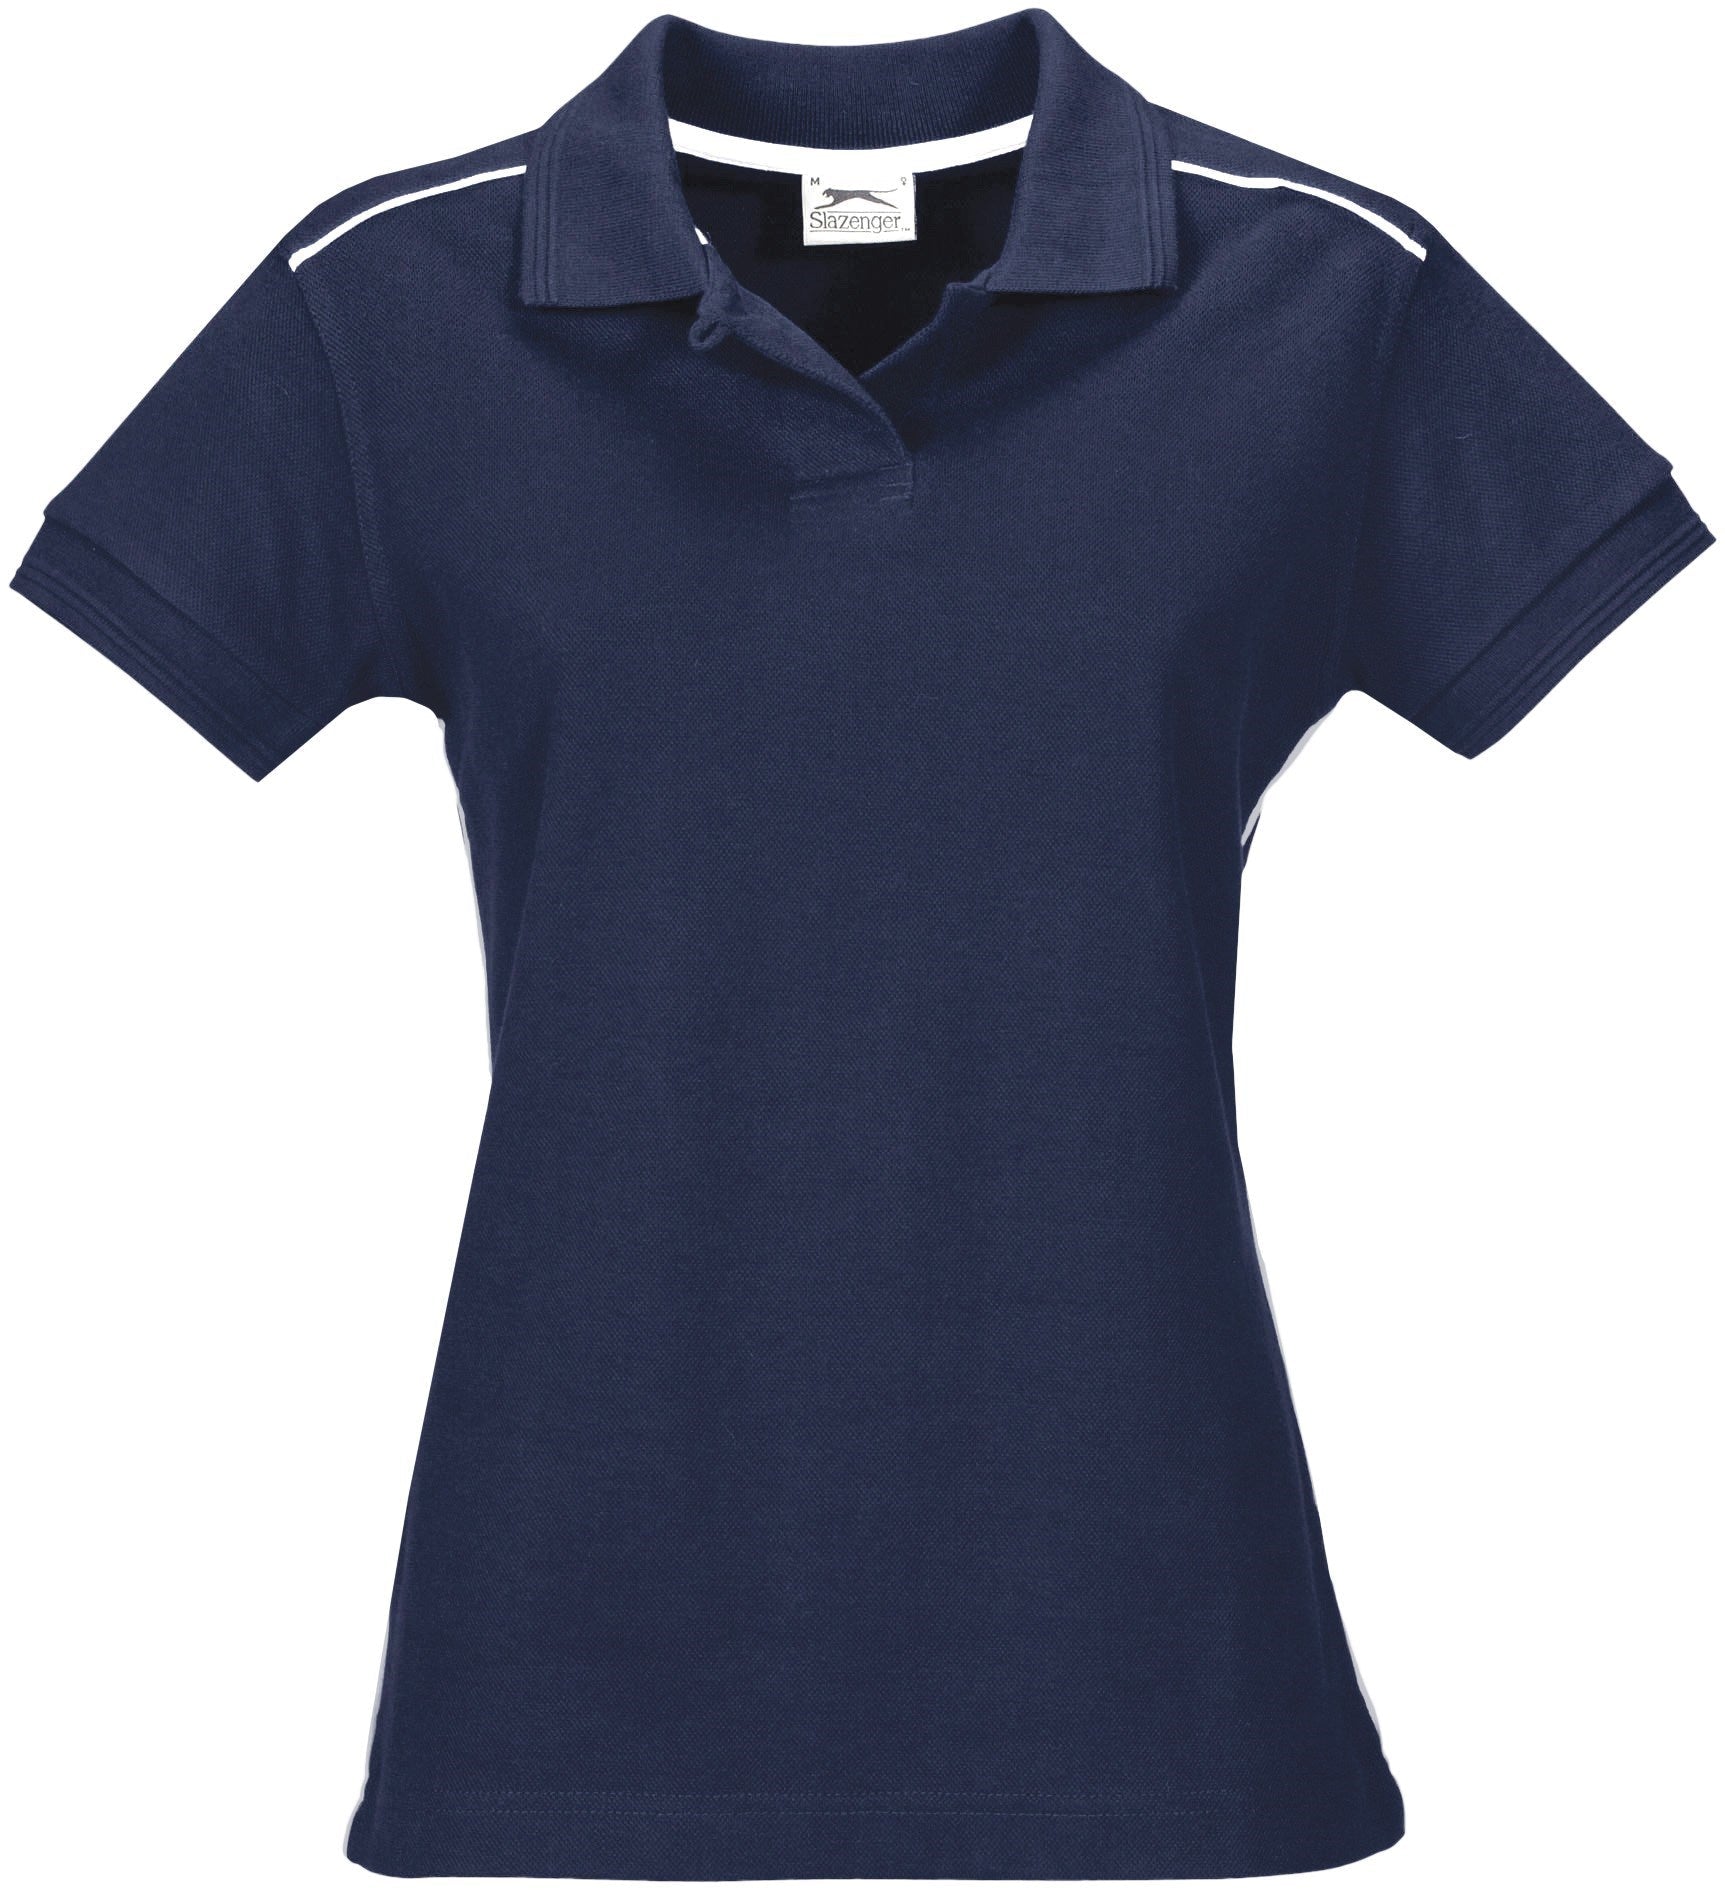 Ladies Backhand Golf Shirt - Green Only-L-Navy-N